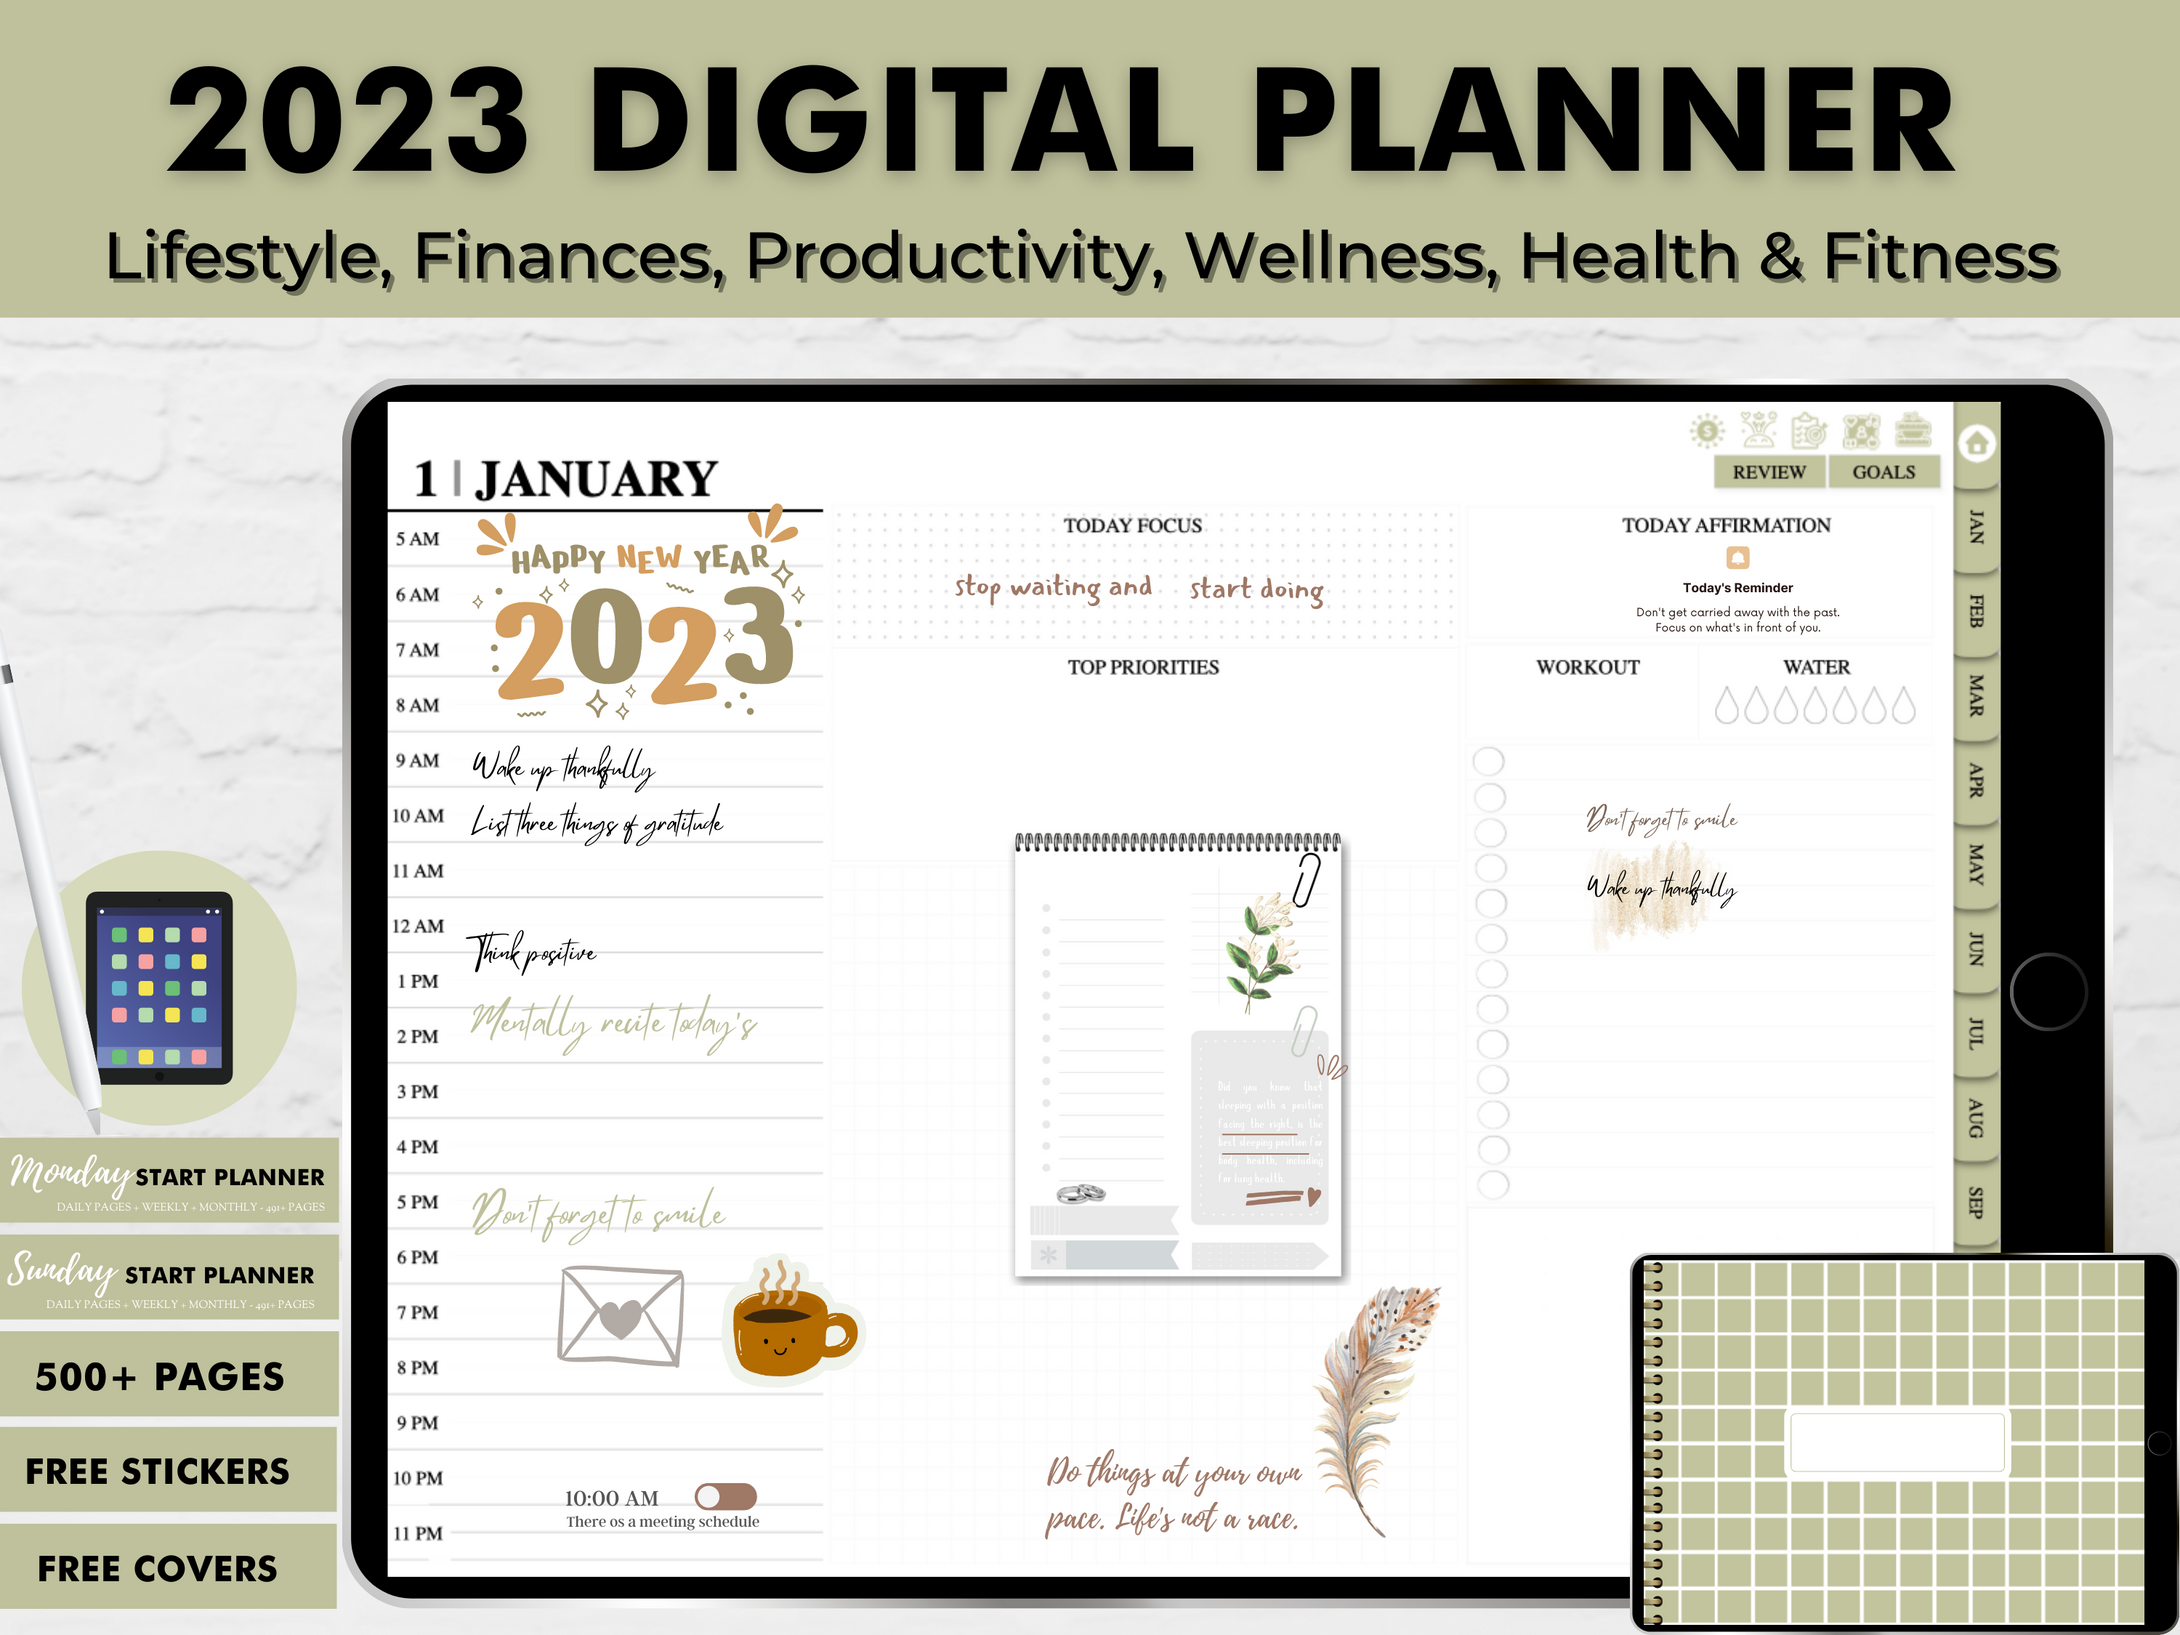 2023 Digital Planner The ULTIMATE goal planner